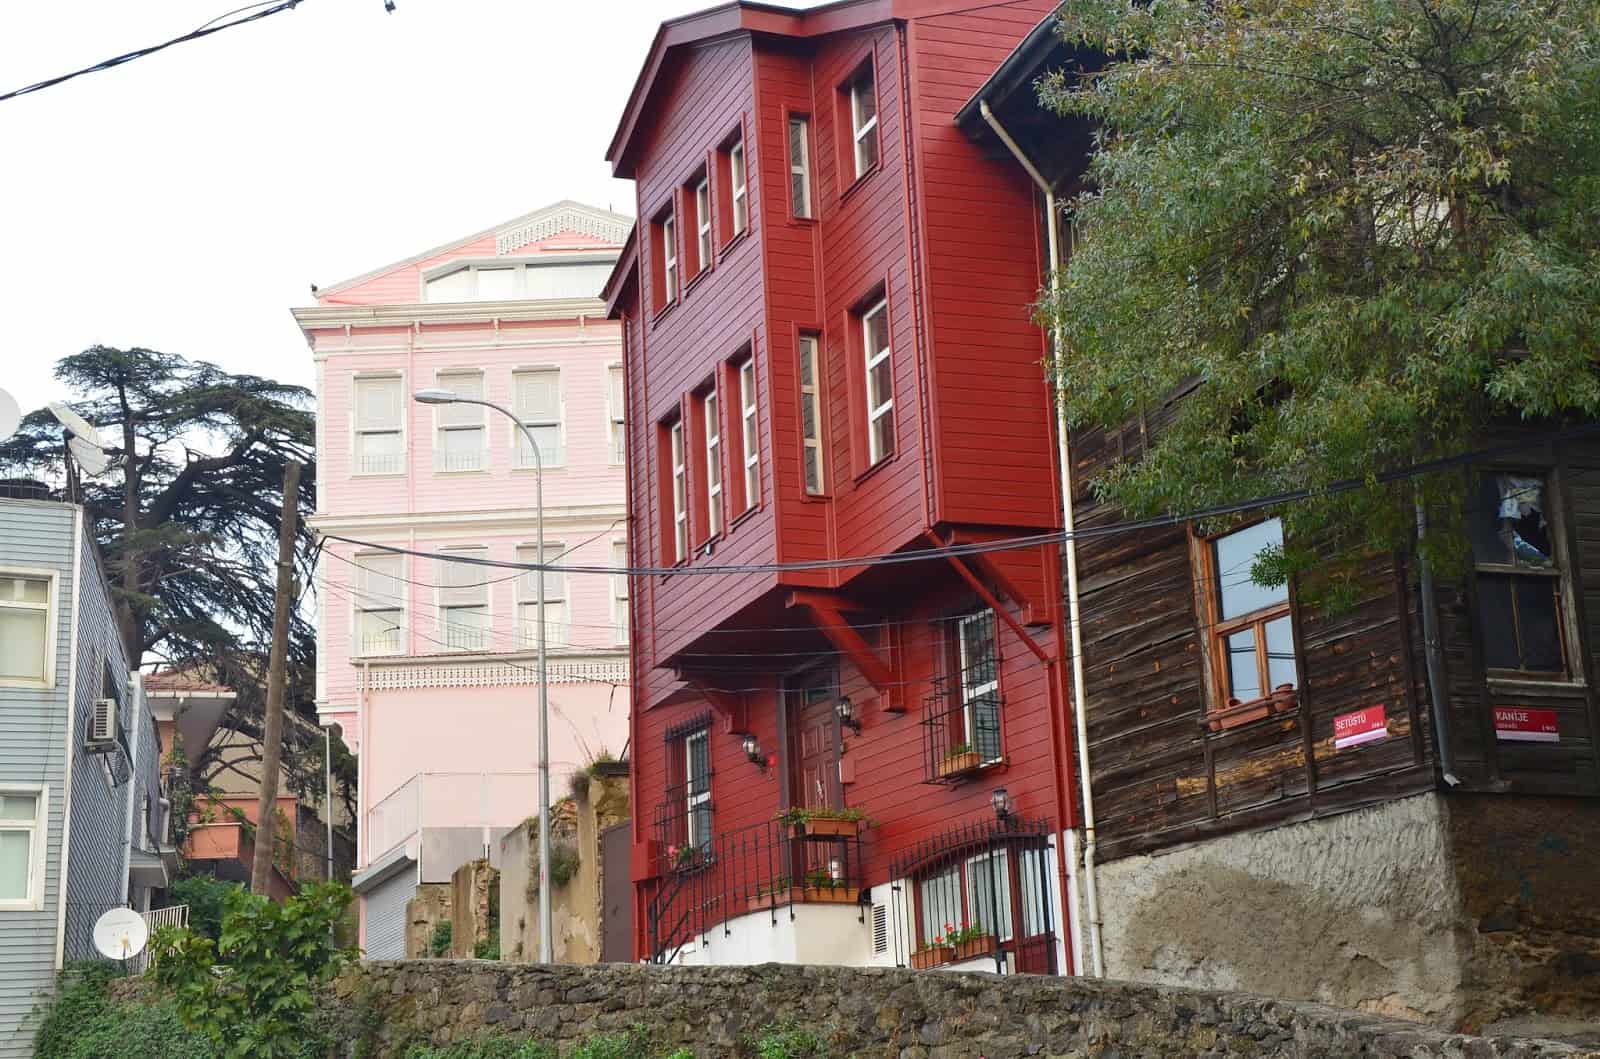 Ottoman homes in Istanbul, Turkey